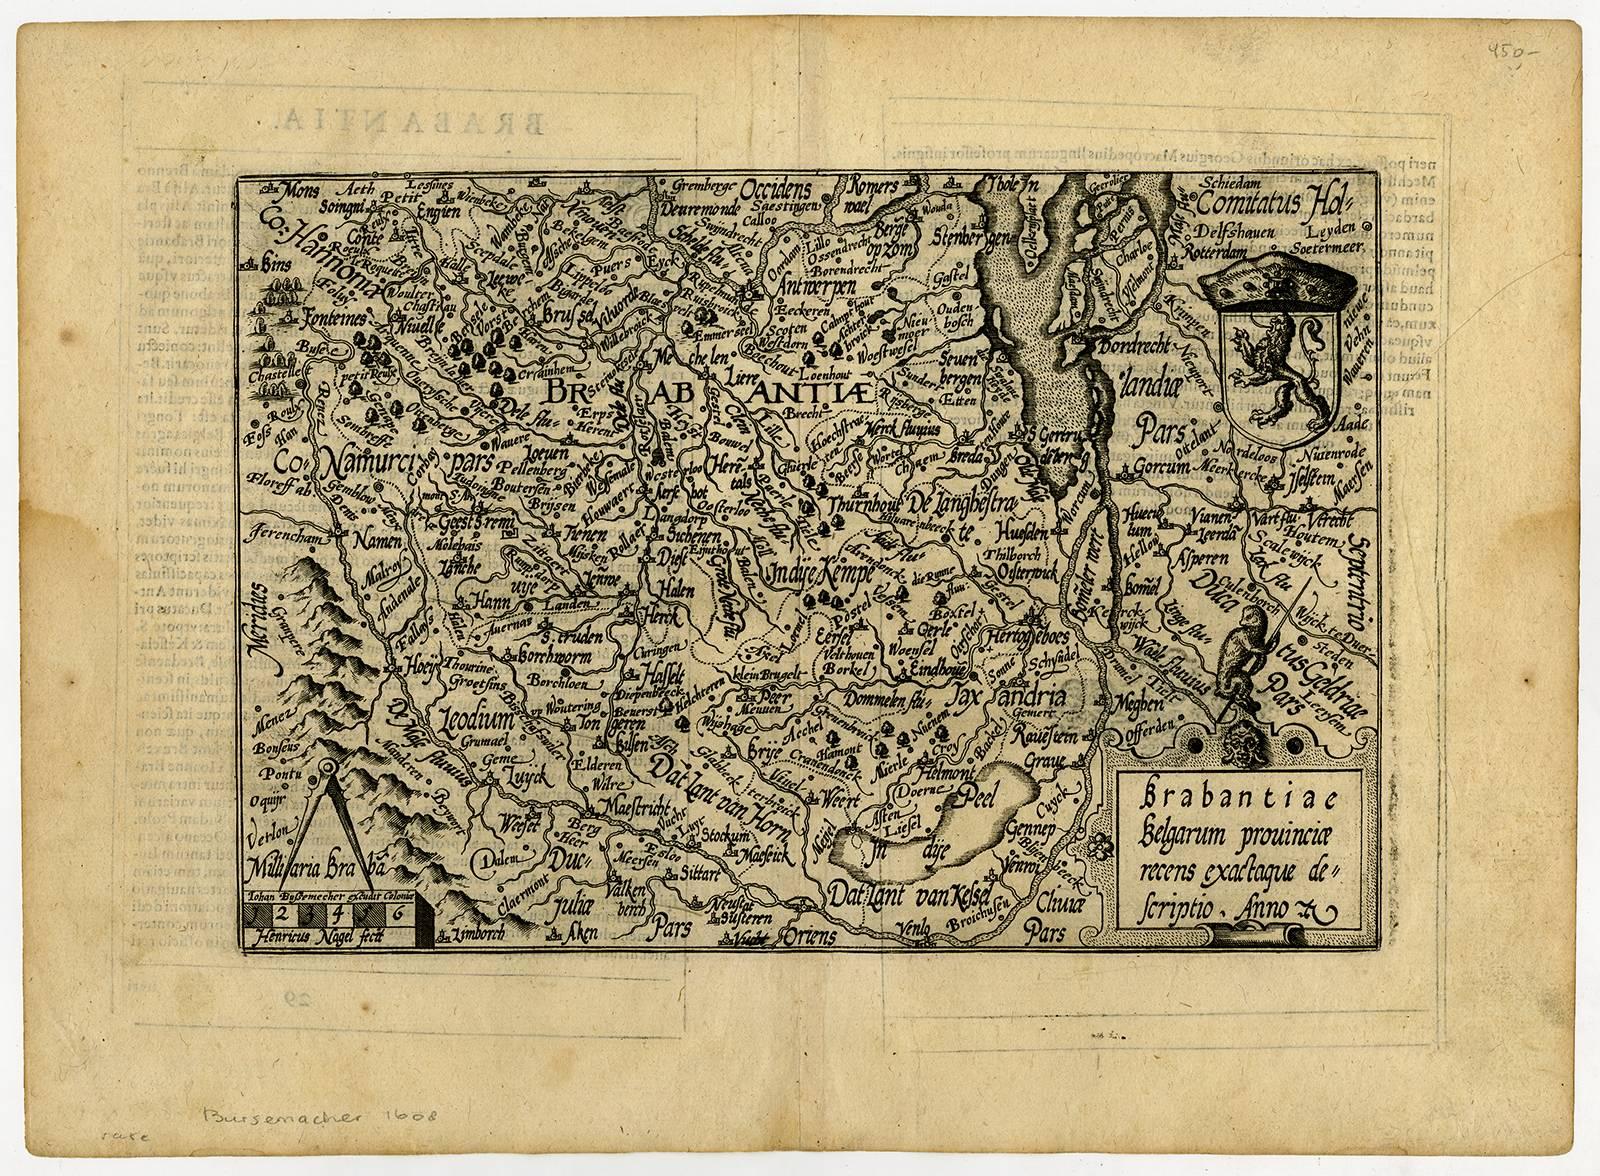 Johann Busschemacher Print - Brabantiae Belgarum provinciae - Map of Brabant.